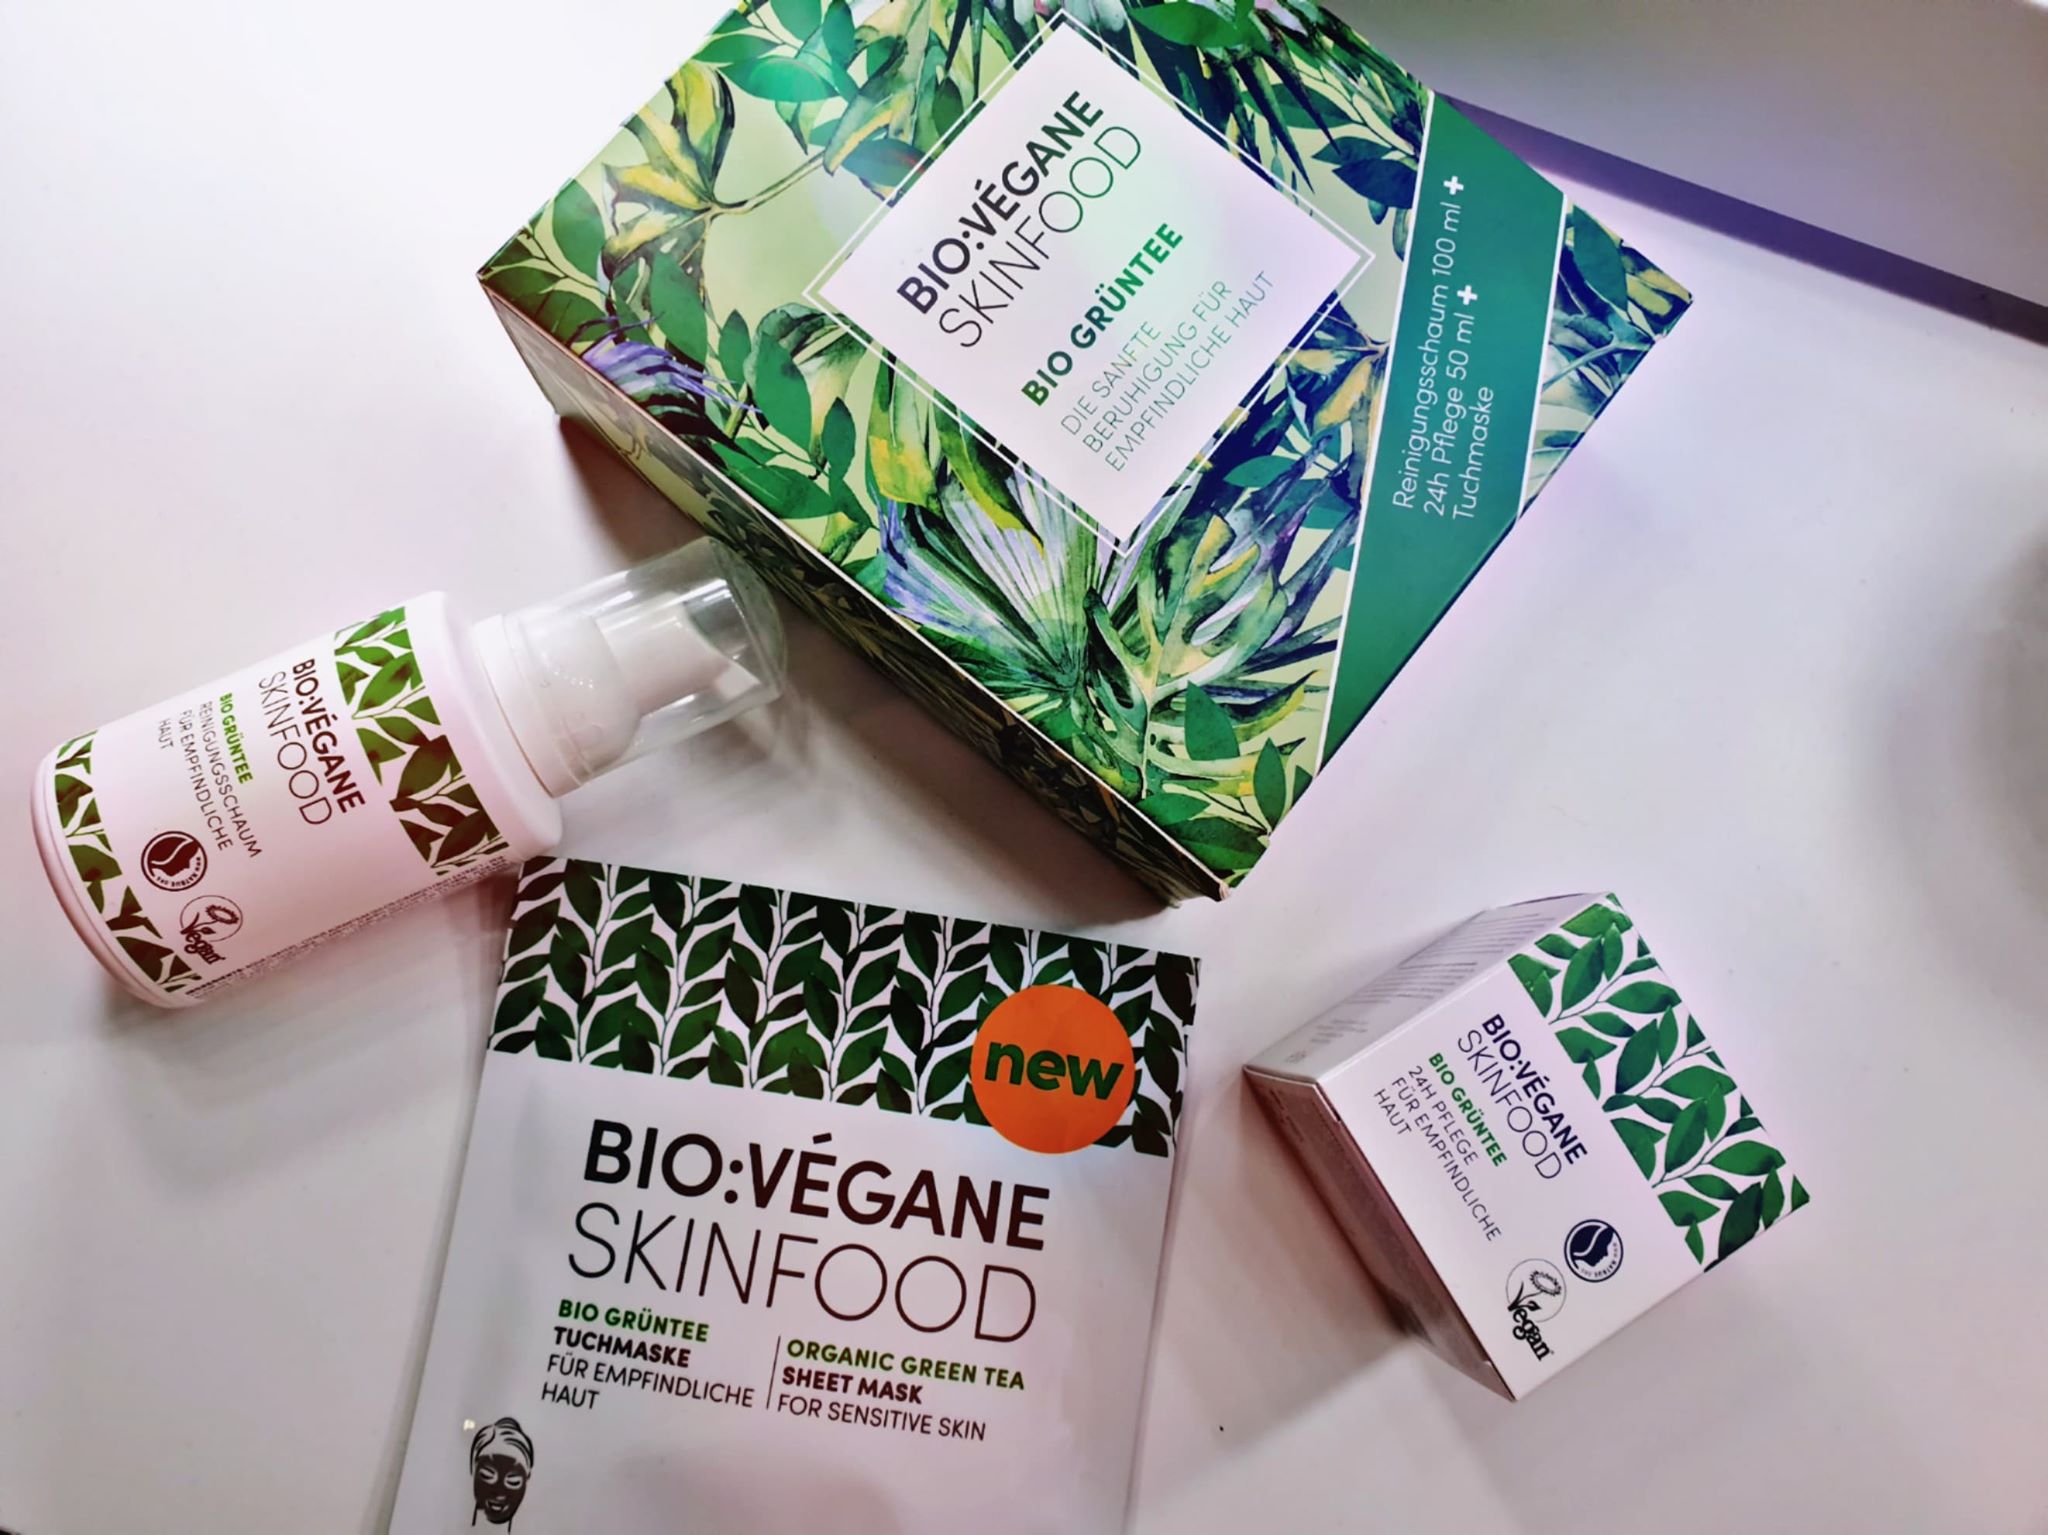 Bio:Vegane organic green tea collection